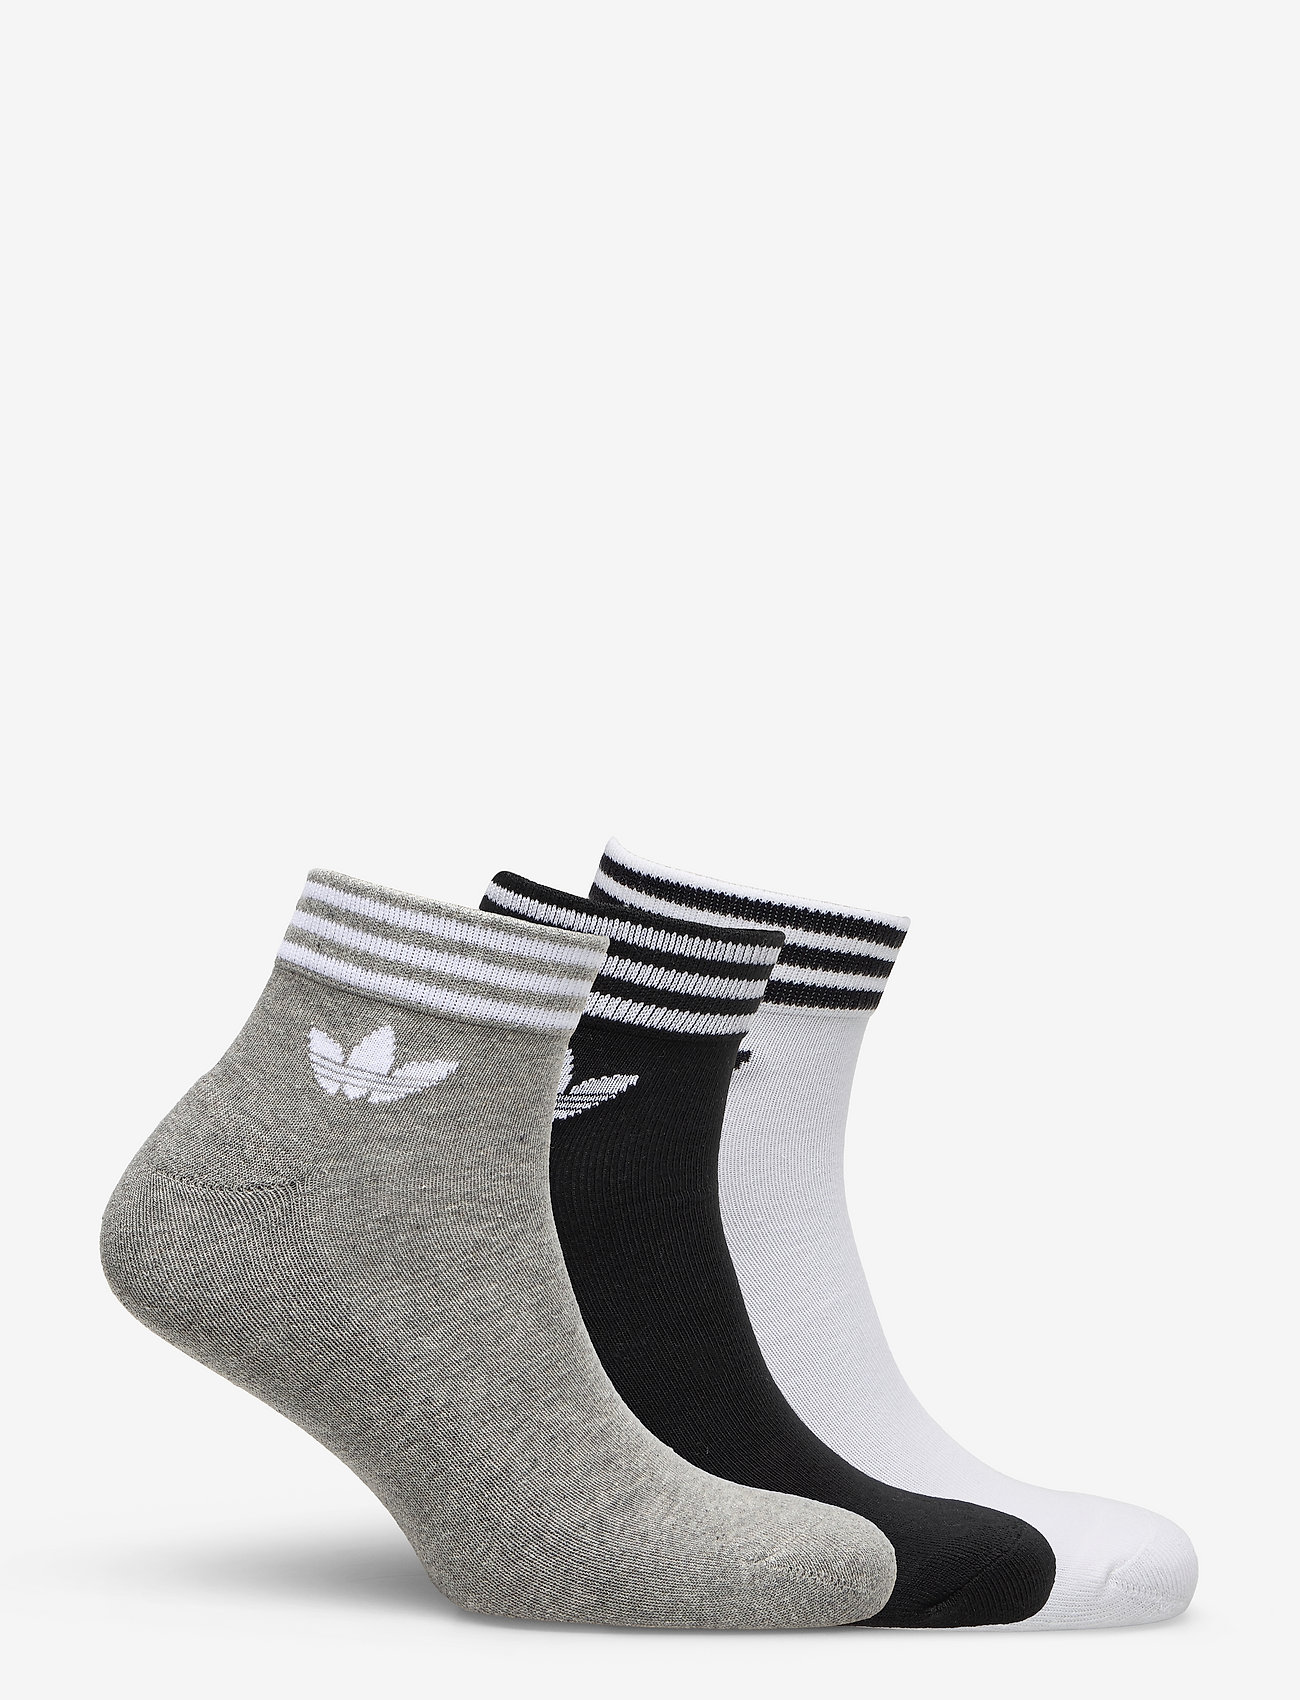 adidas Originals Tref Ank Sck Hc - Ankle socks | Boozt.com